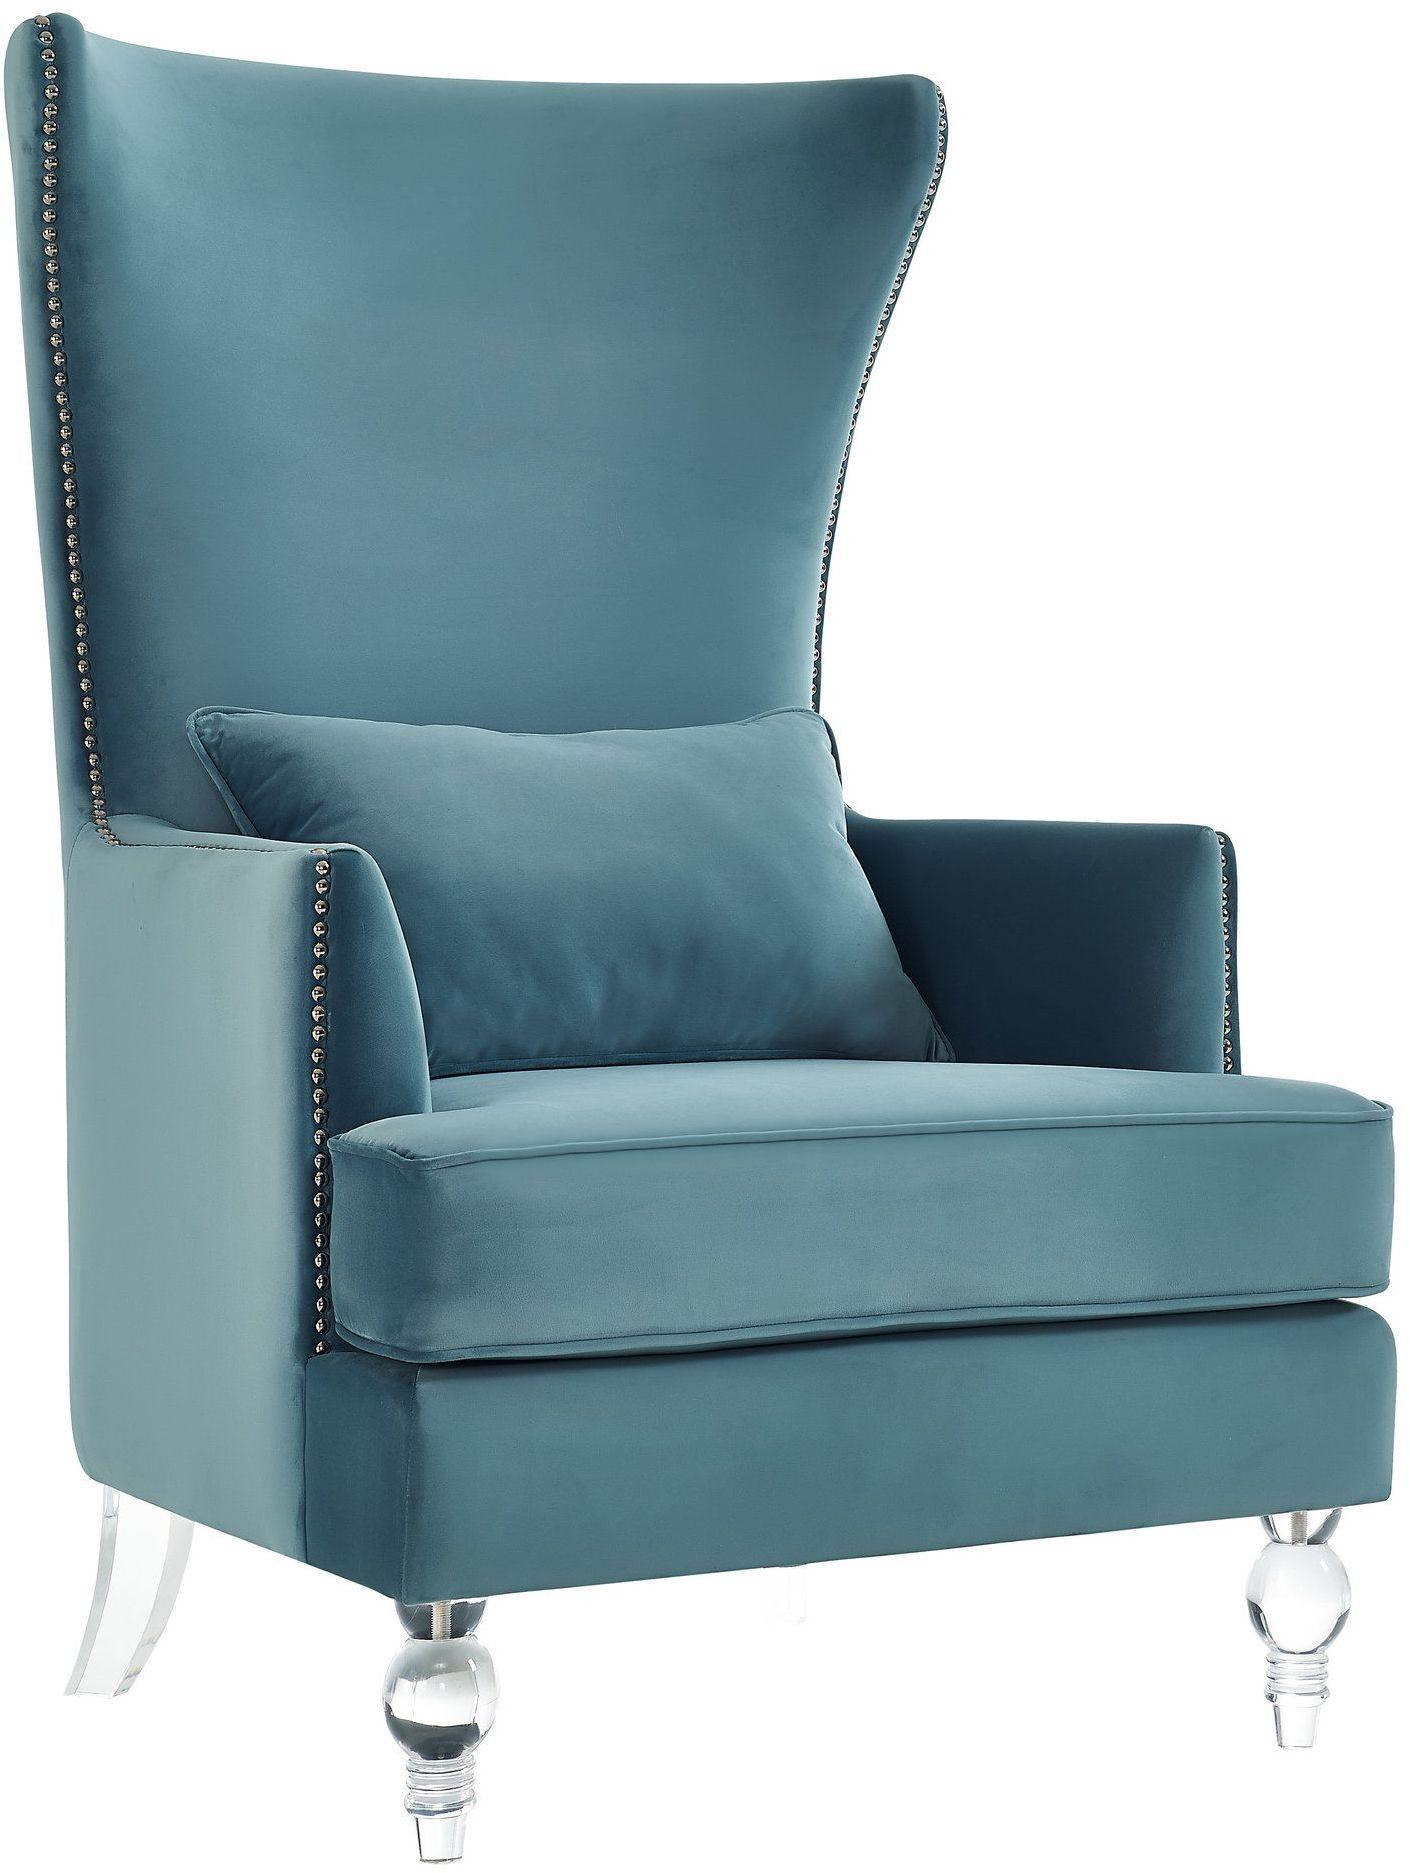 Tov Furniture Bristol Sea Blue Tall Chair